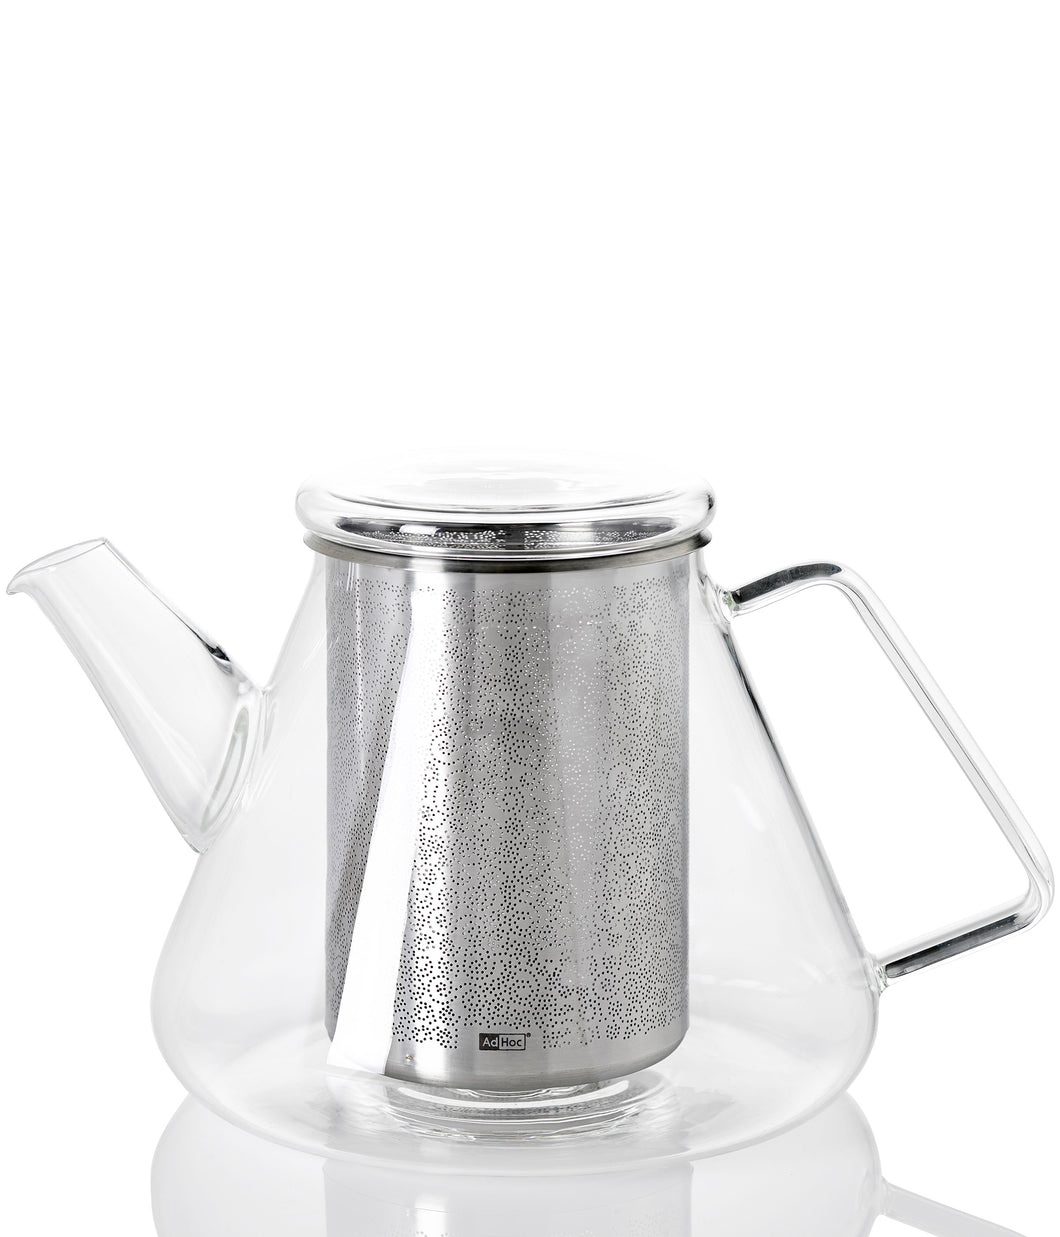 AdHoc Orient+ Glass Teapot, 50 fluid oz